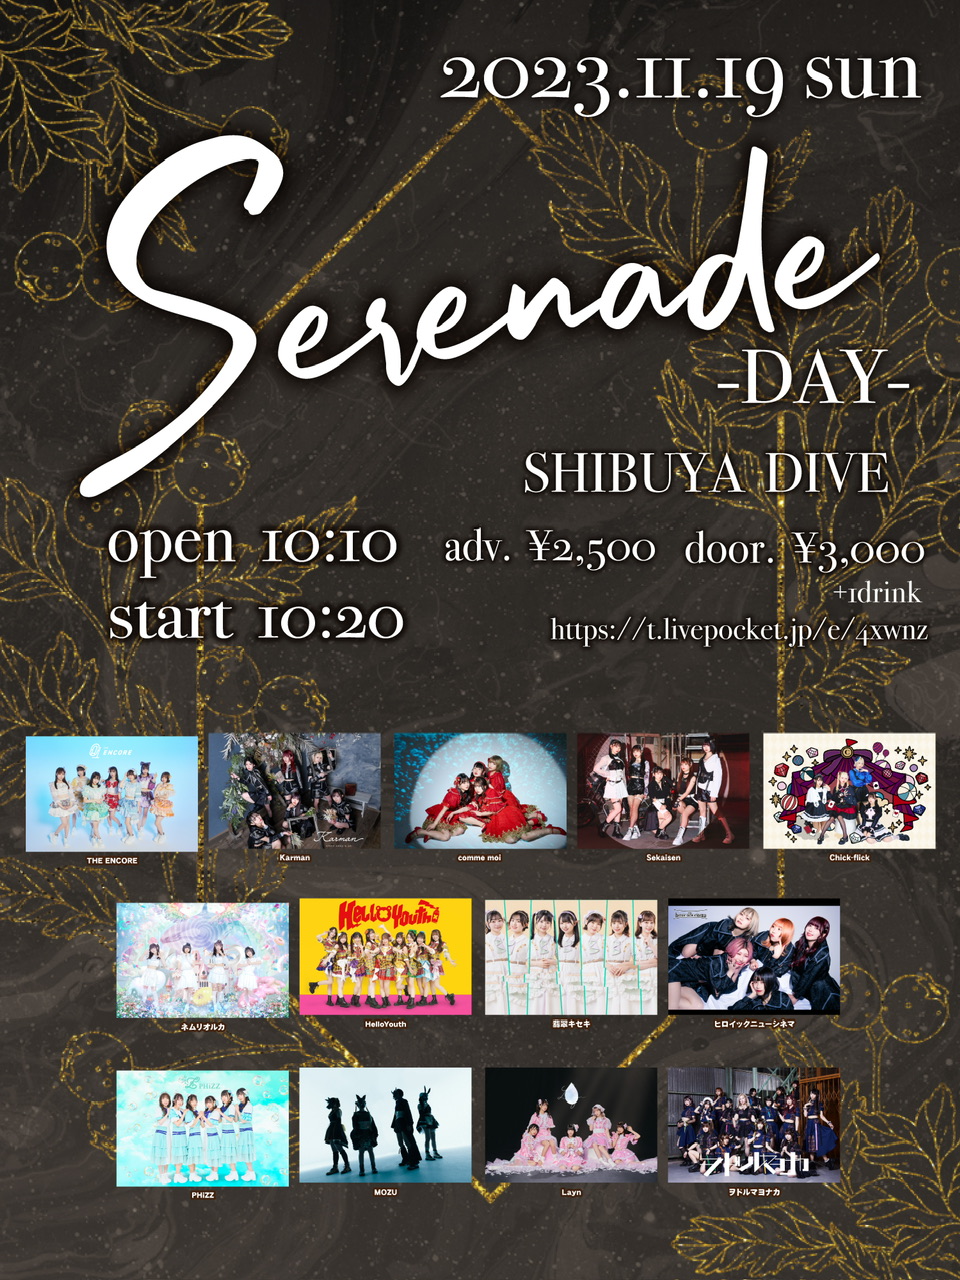 「Serenade」-DAY-